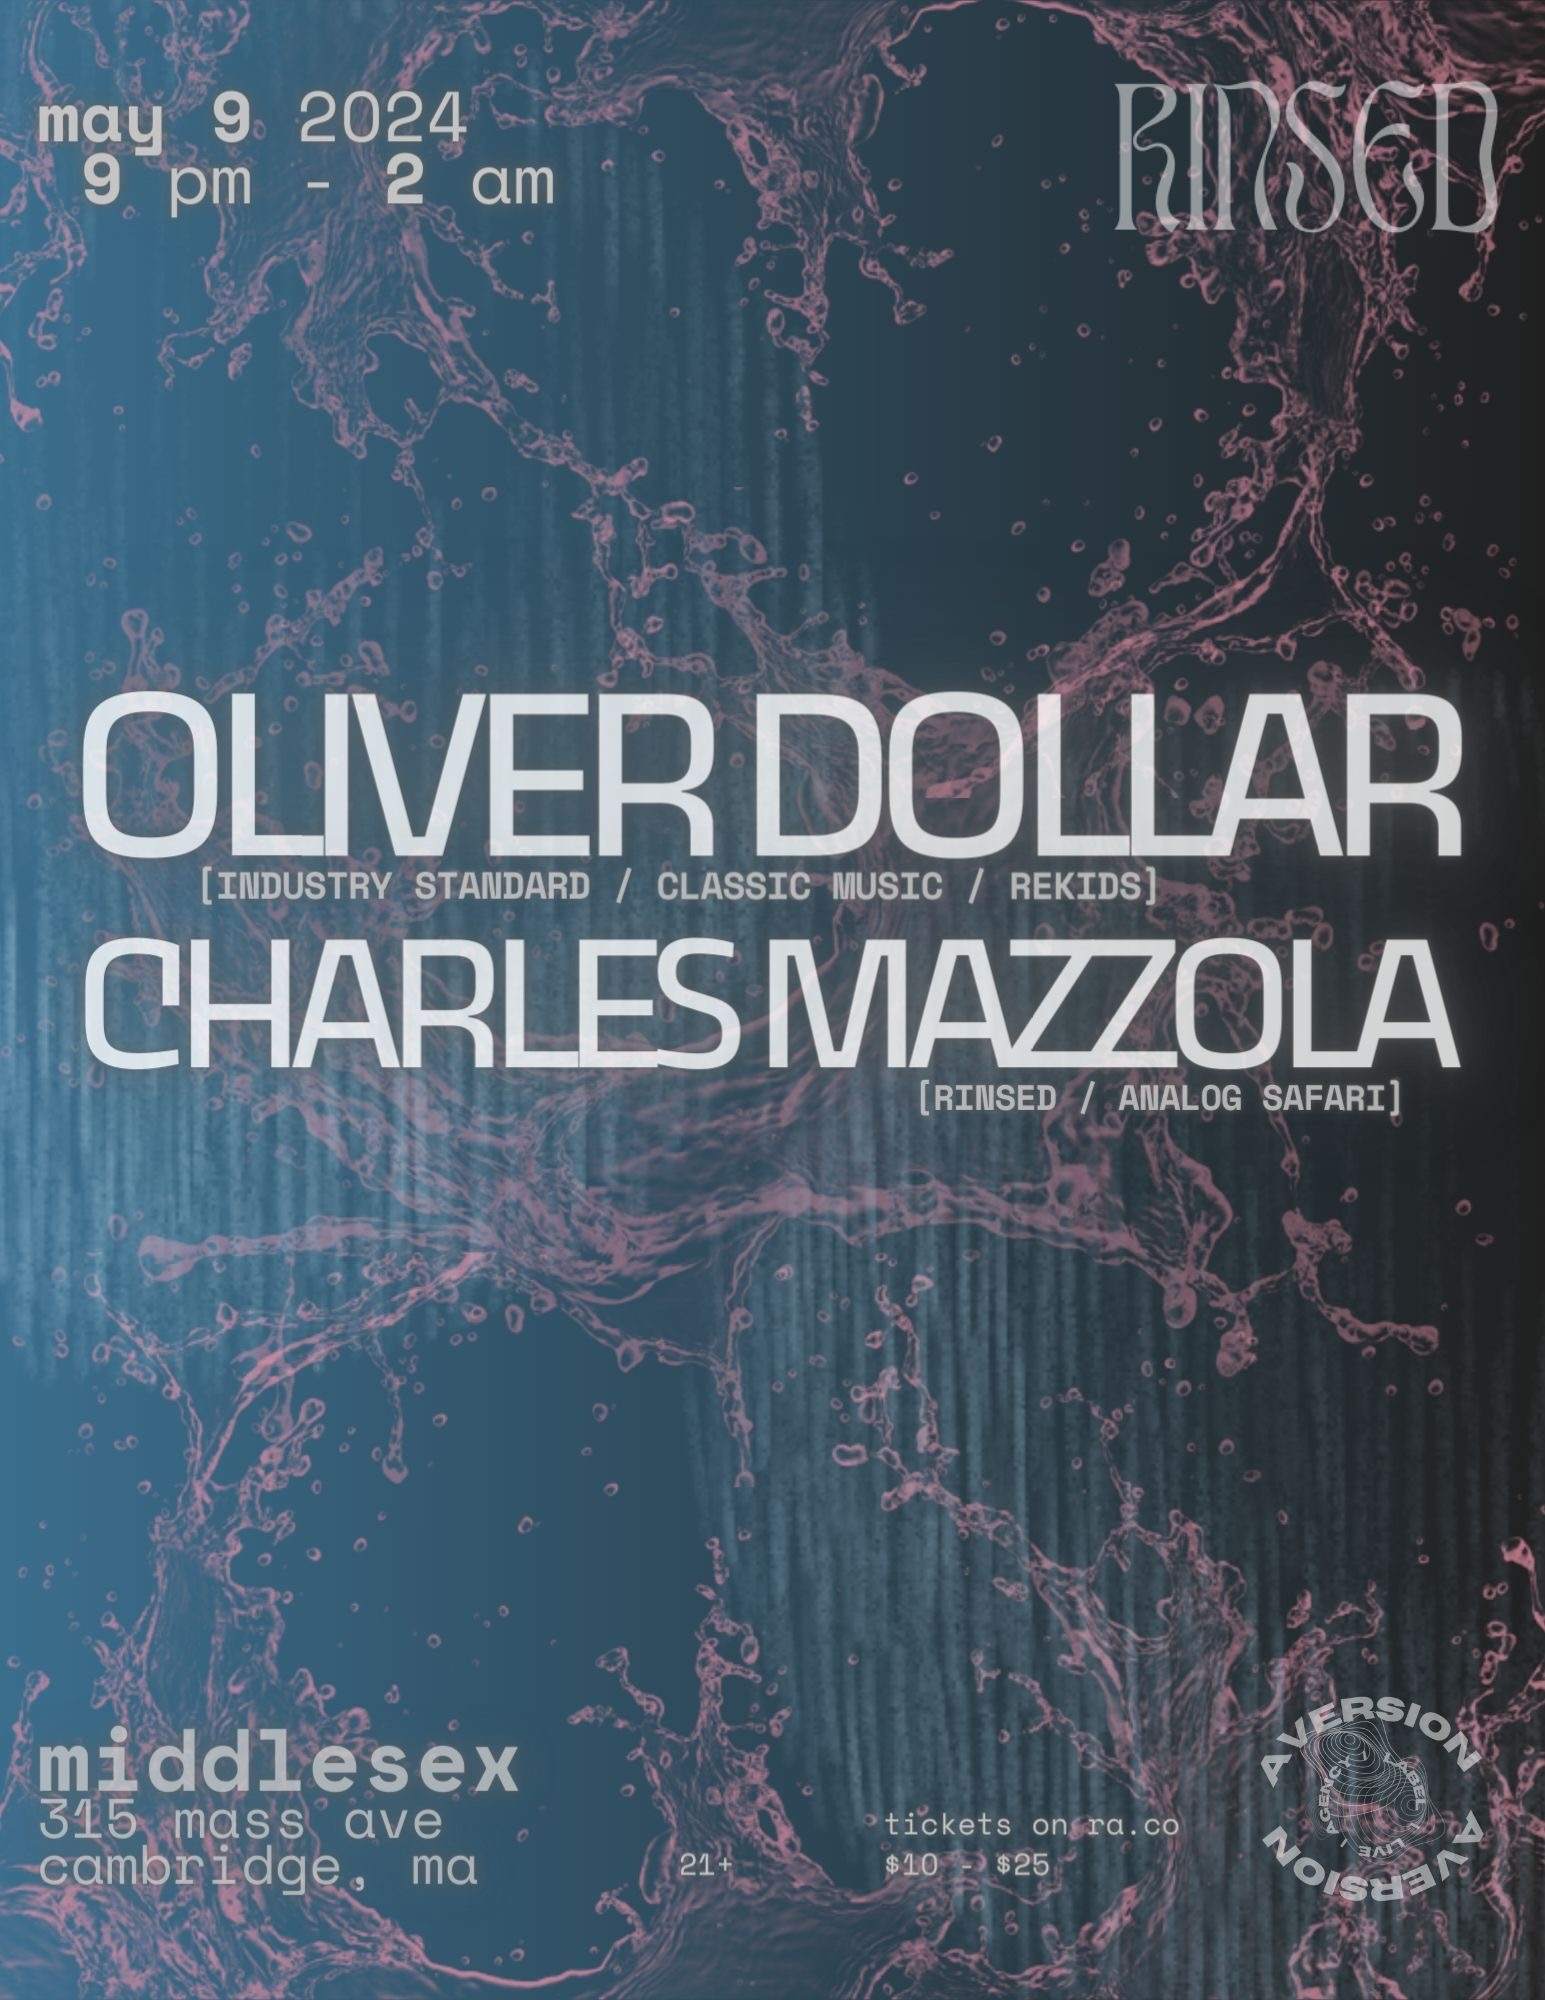 [Aversion] RINSED: Oliver Dollar - Charles Mazzola - Página frontal